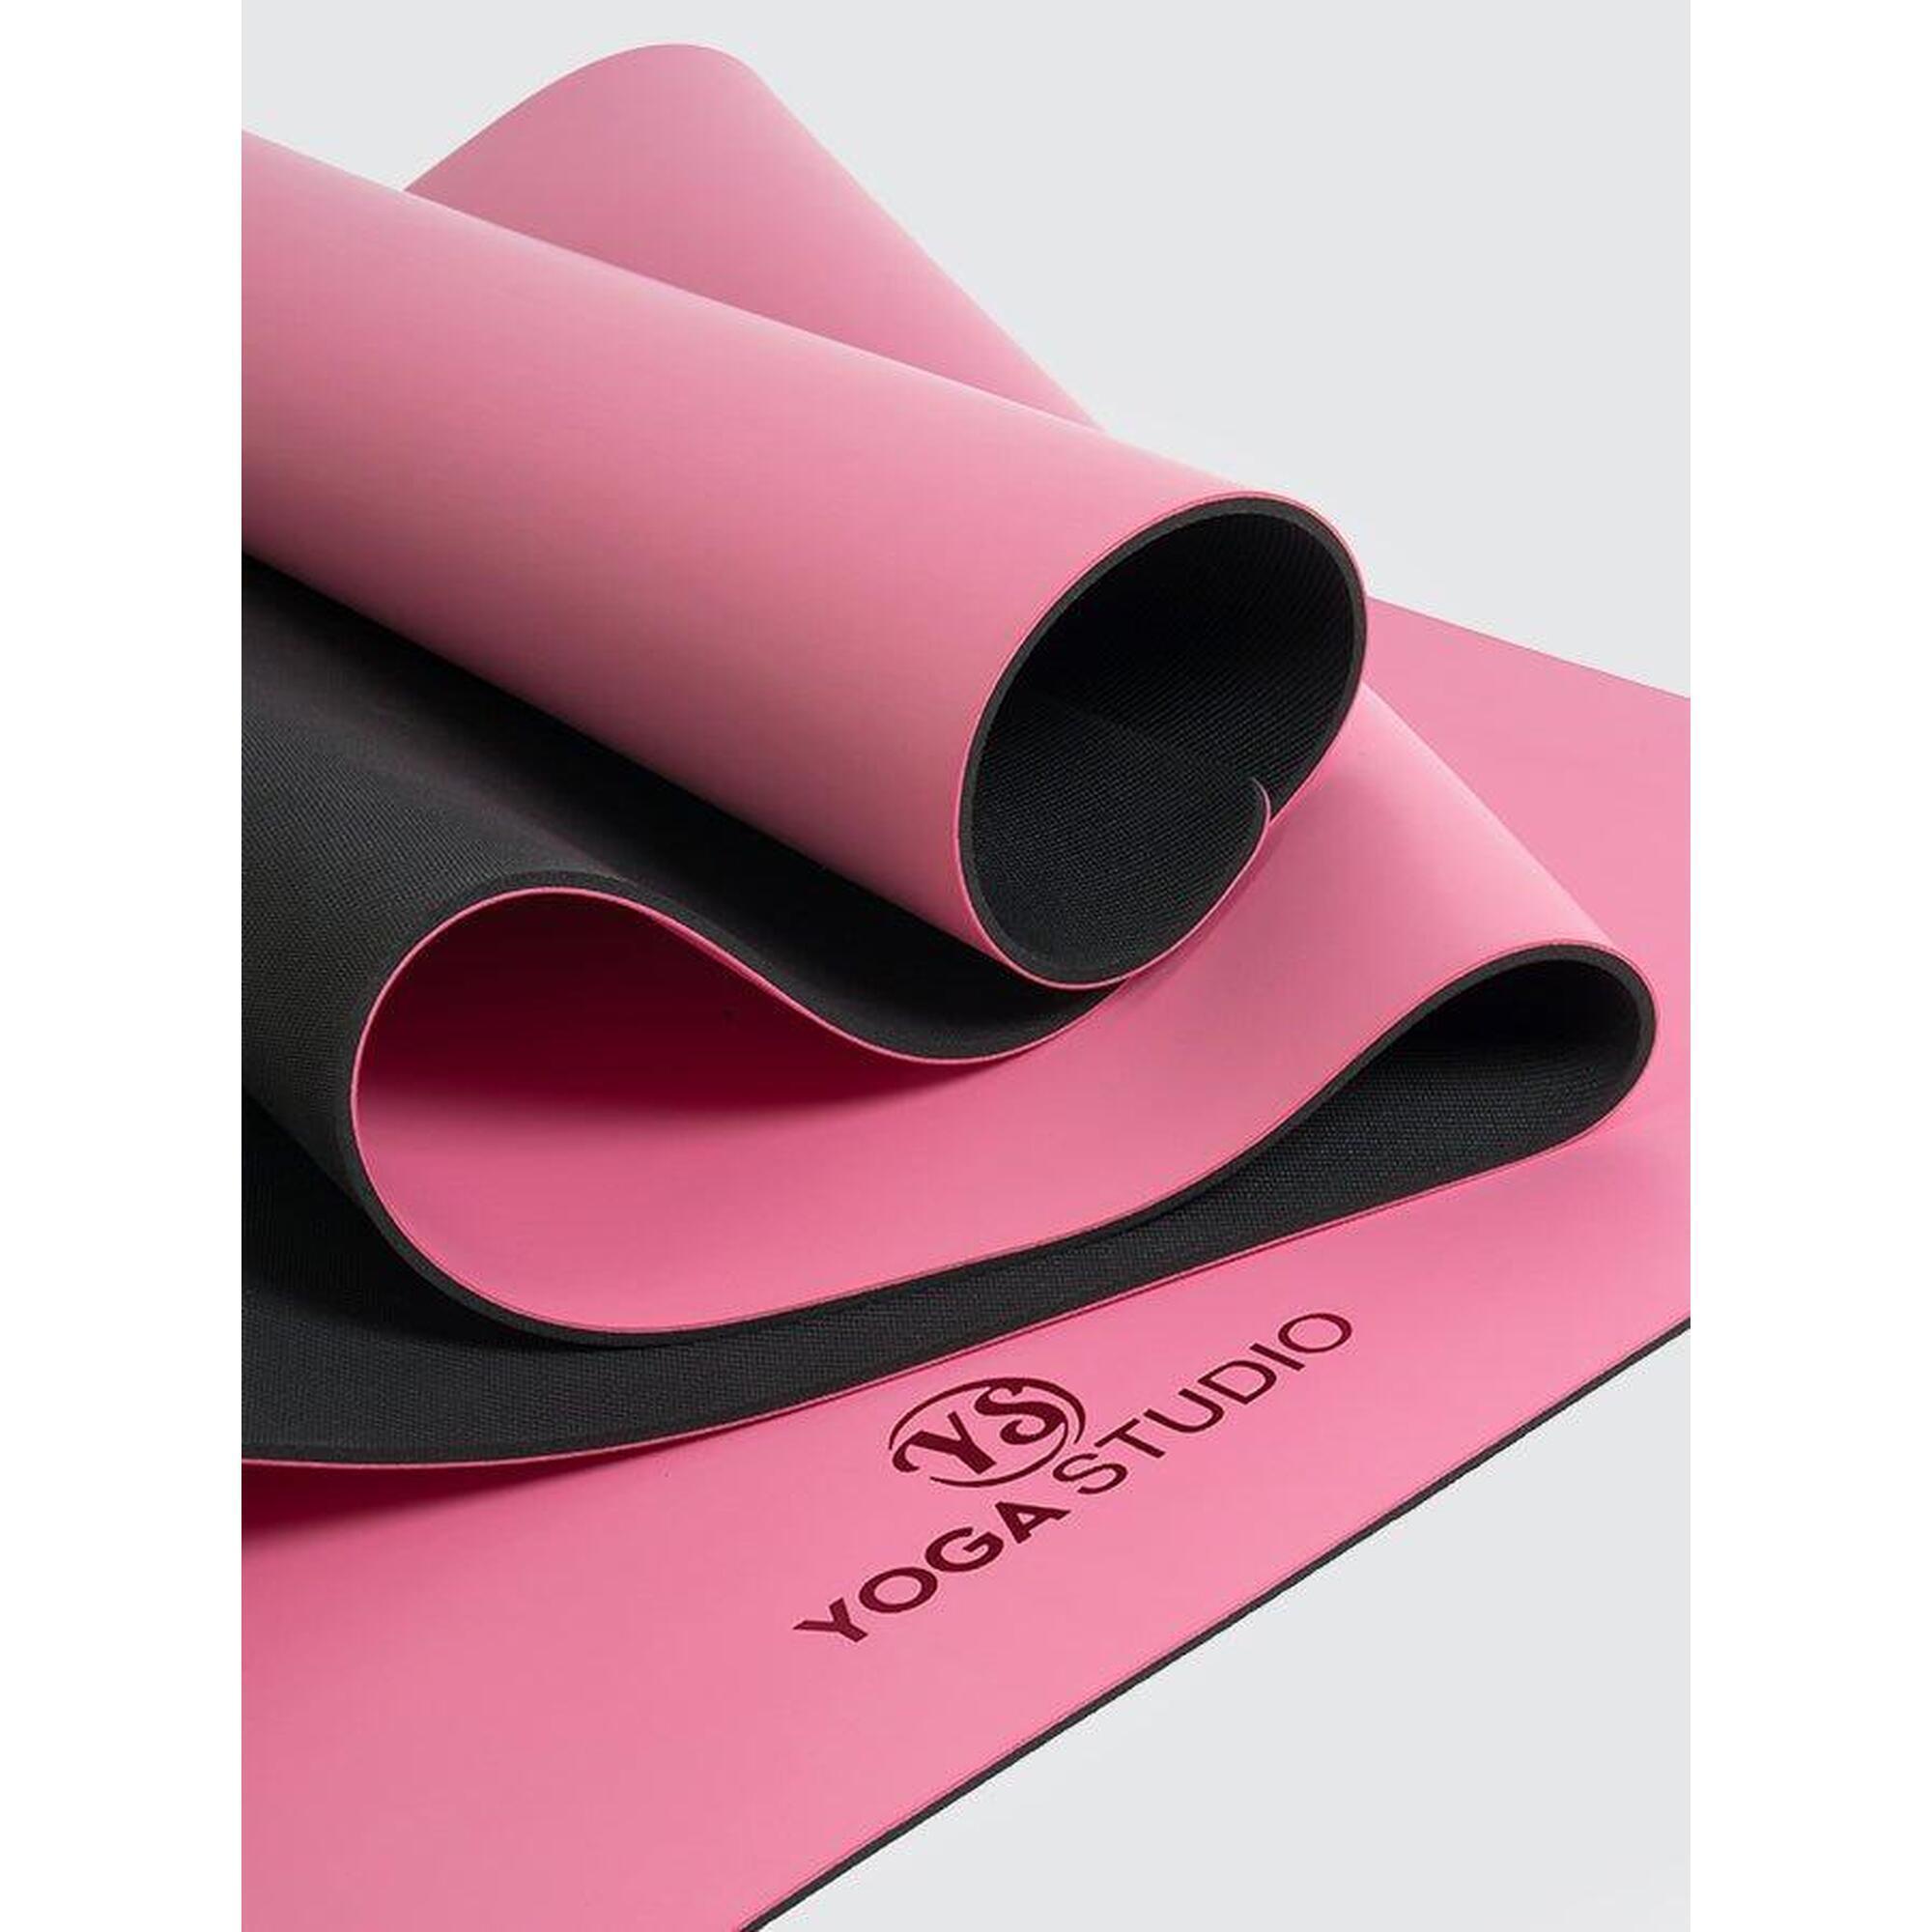 Yoga Studio The Grip Compact Yoga Mat 4mm - Pink 1/4